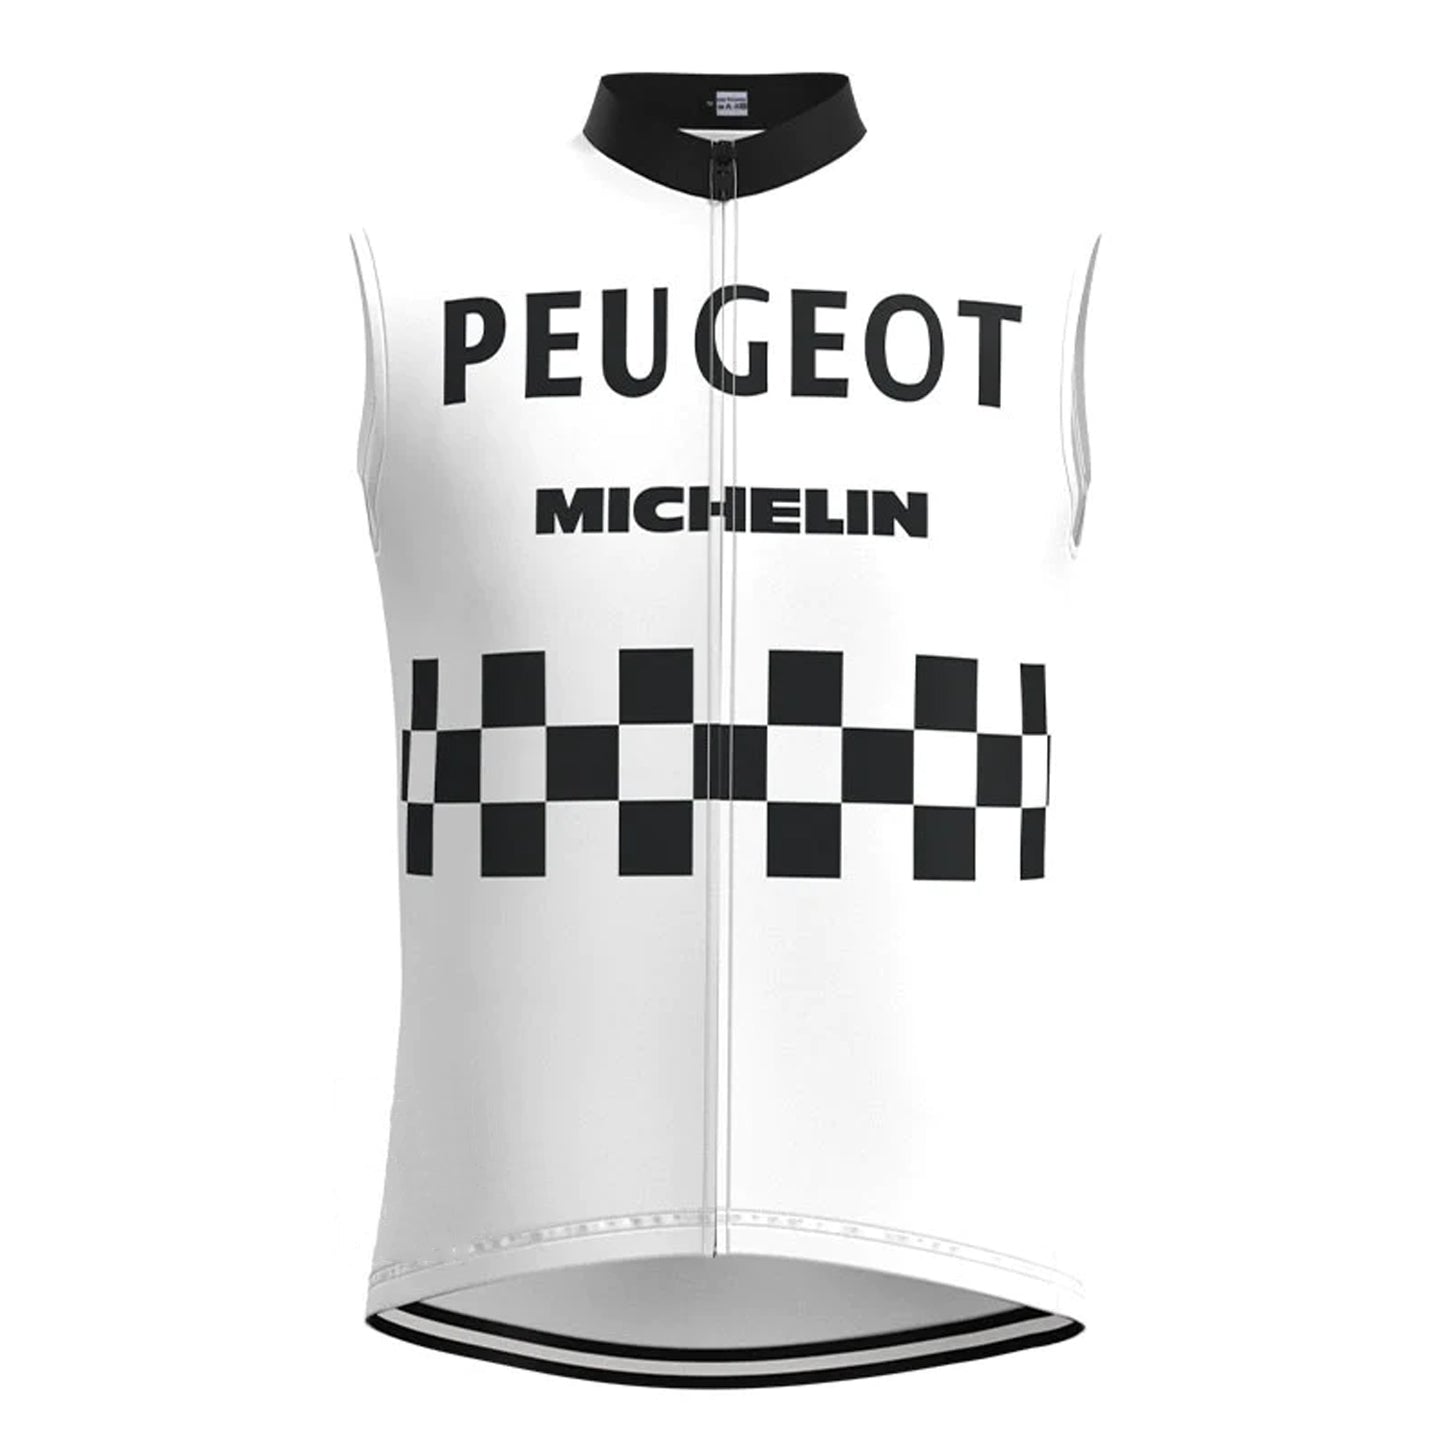 Peugeot White Retro MTB Cycling Vest